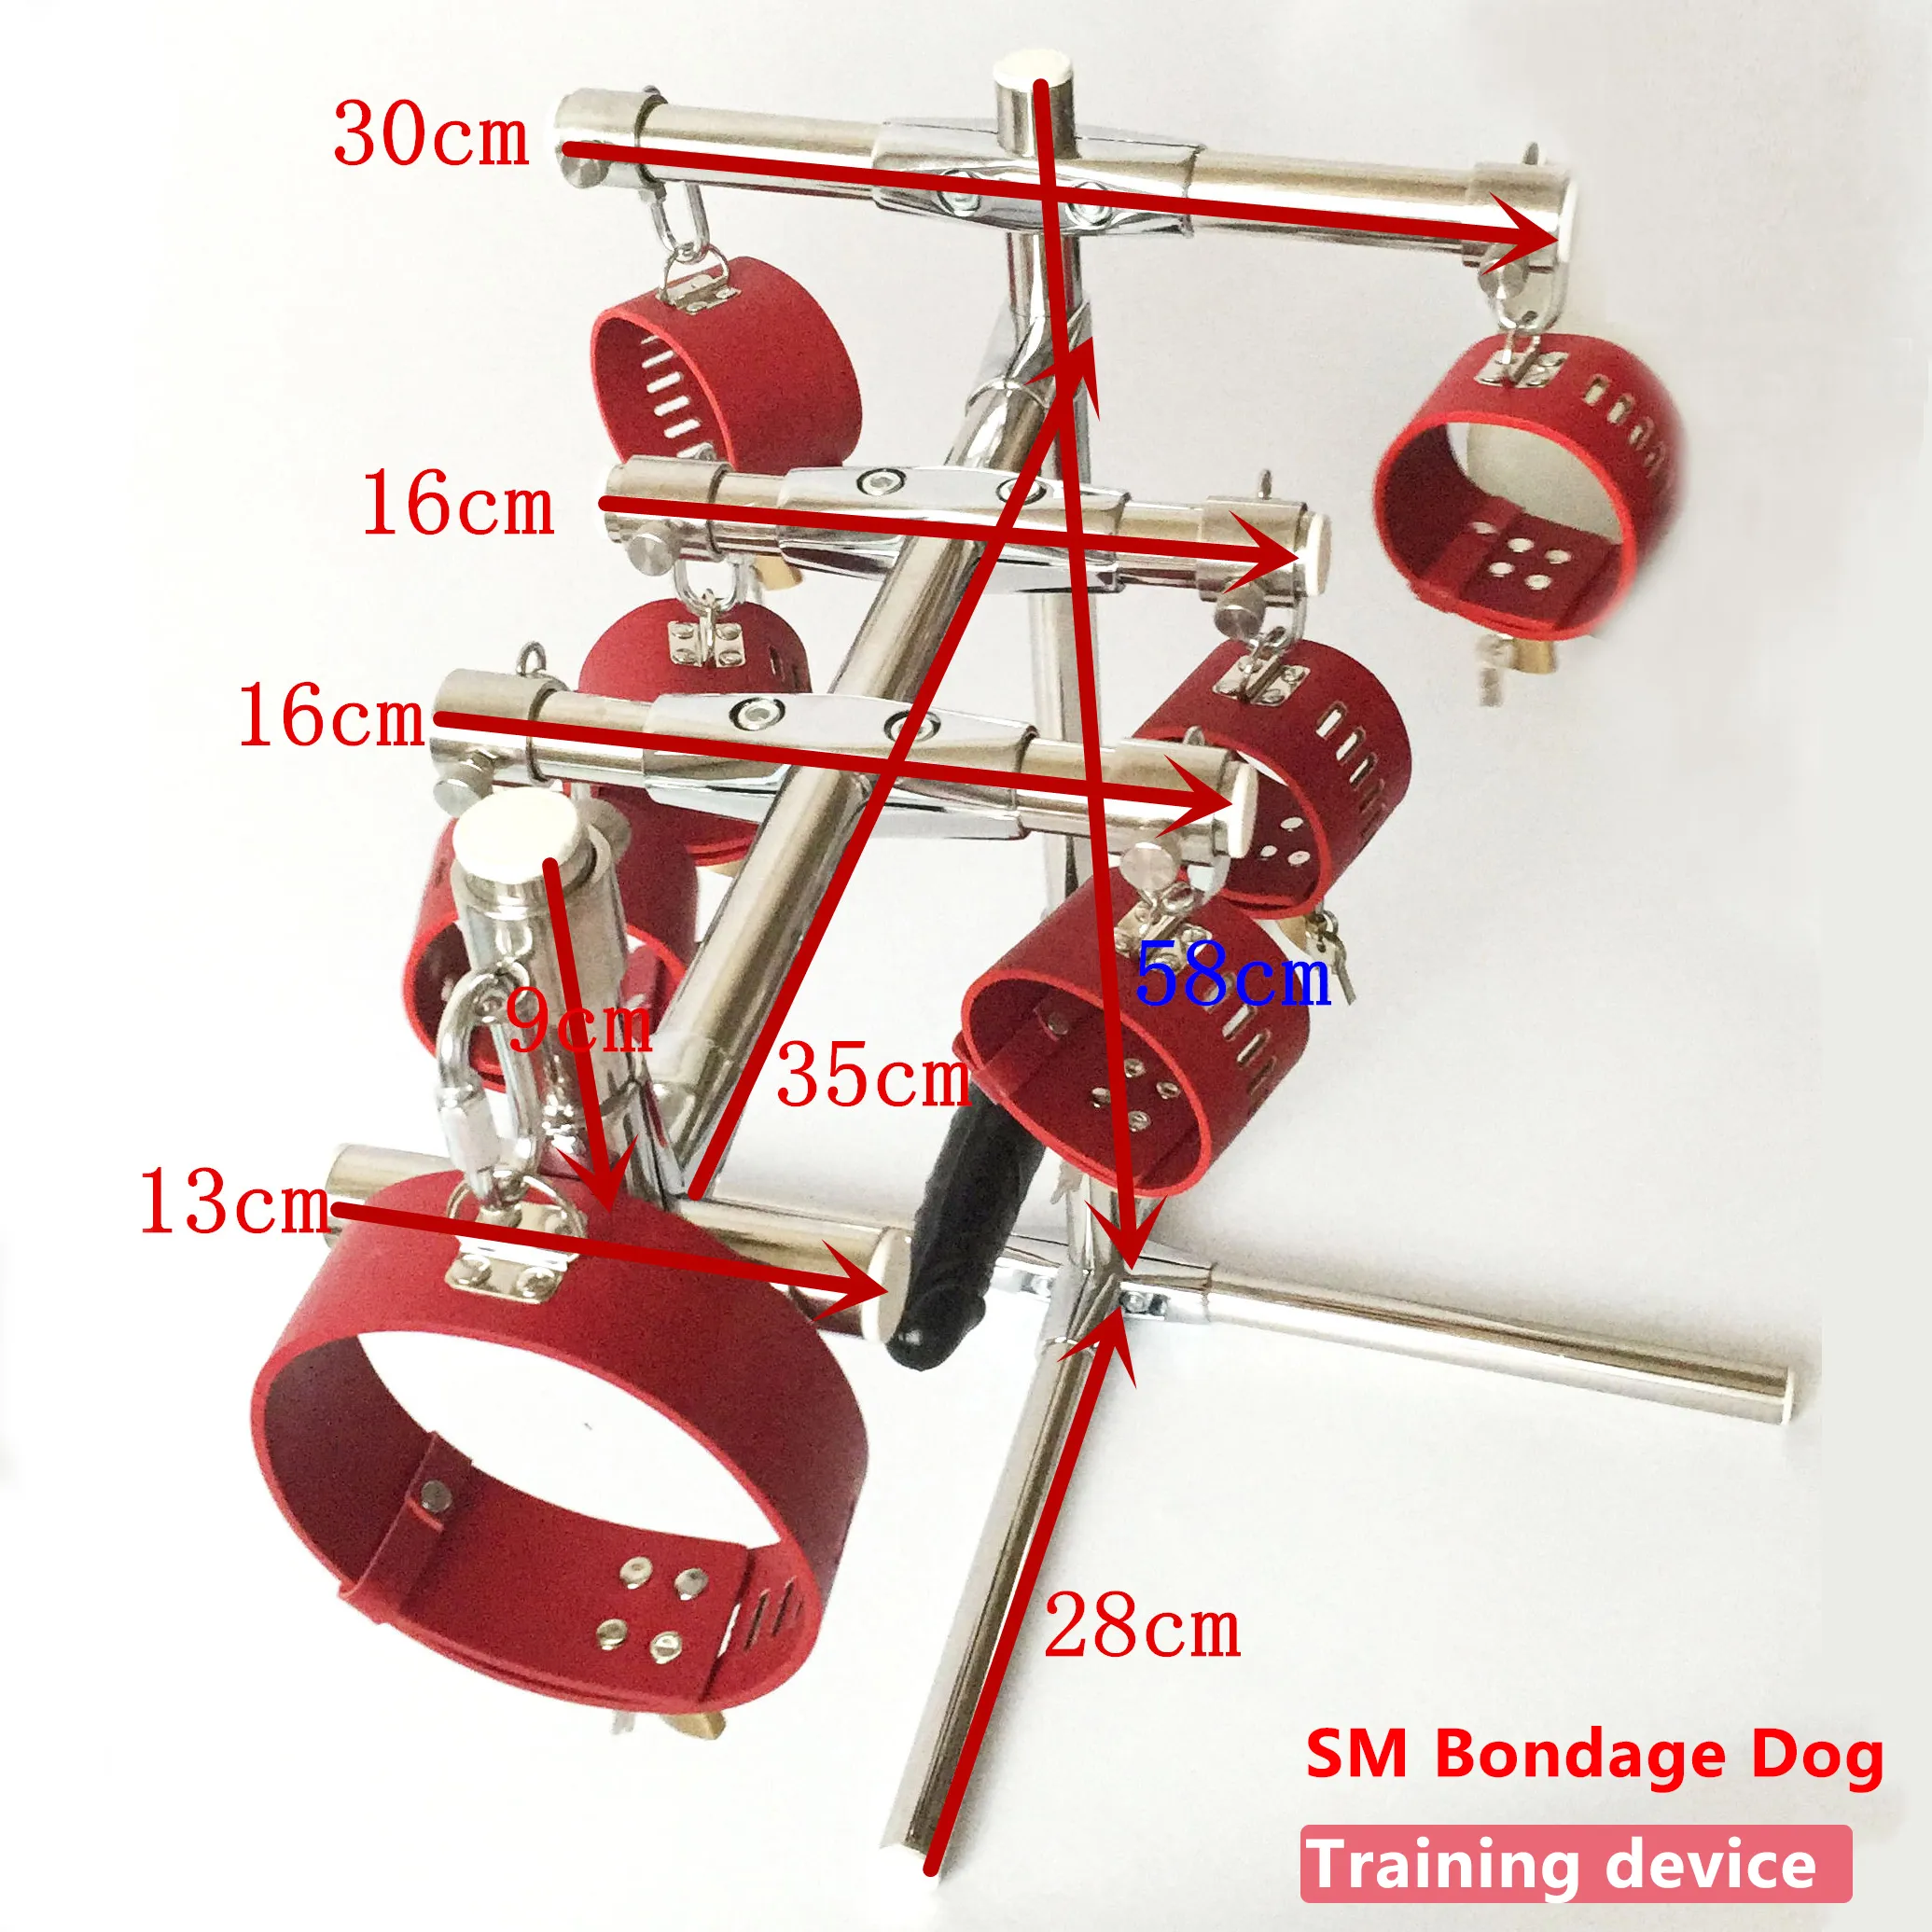 Rostfritt stål Rod Portable SM Bondage Dog Training Device med läder Anklet Manschetter Krage och Dildo Harness Sexmöbler